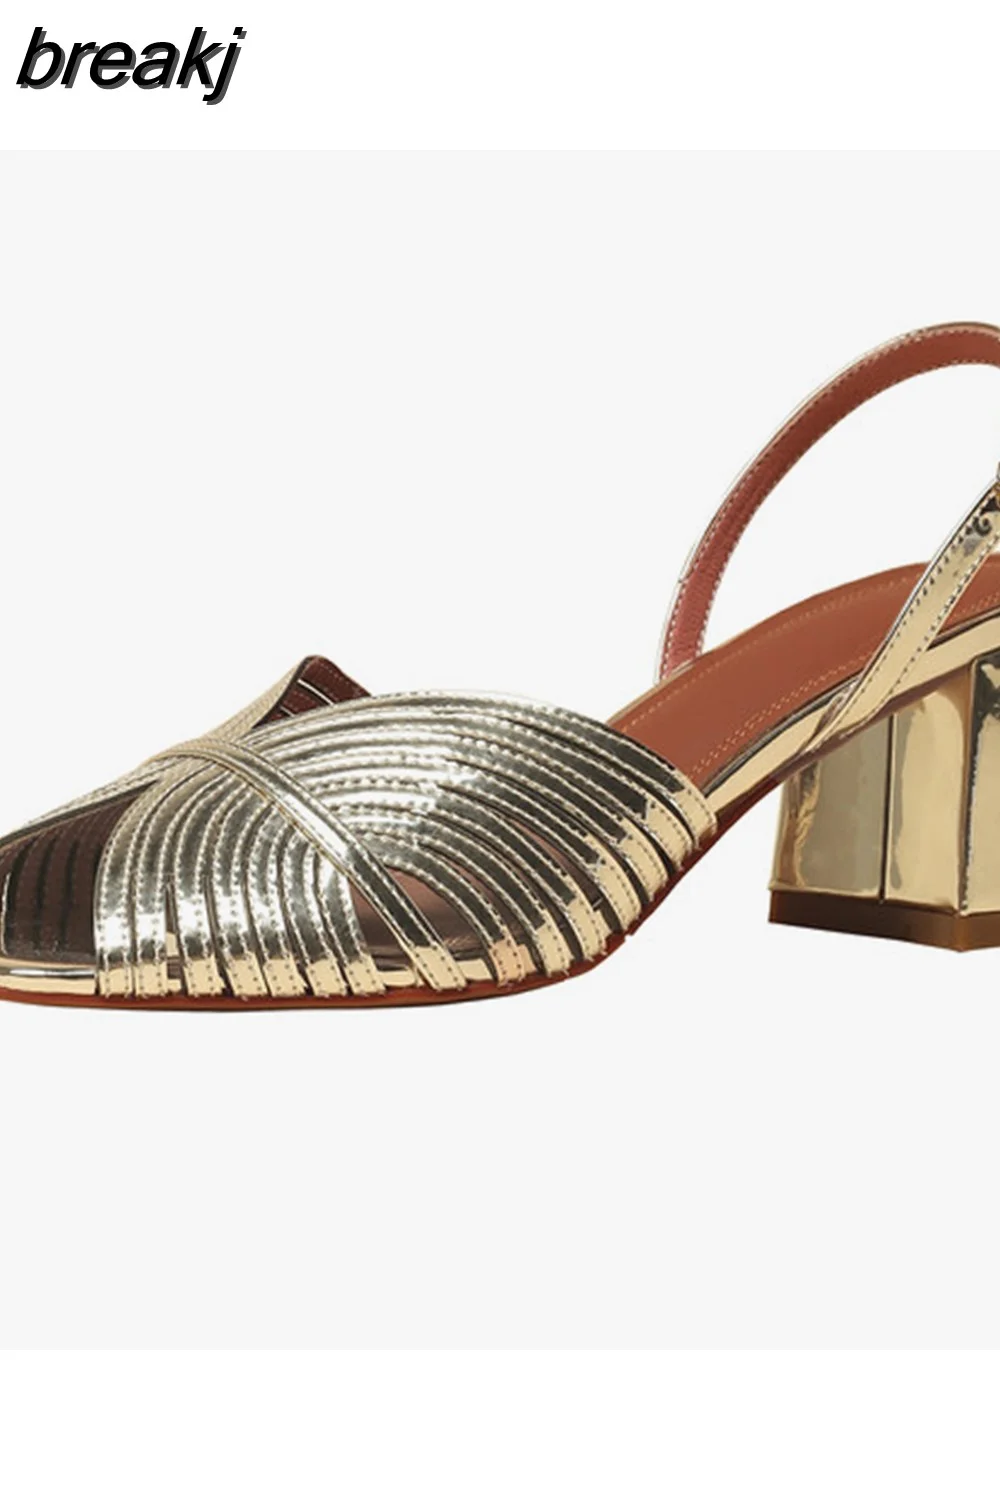 breakj Size 34-39 Women Sandals Rome Leather High Heels Summer Shoes For Women 2023 Trend Open Toe Elegant Heeled Sandals